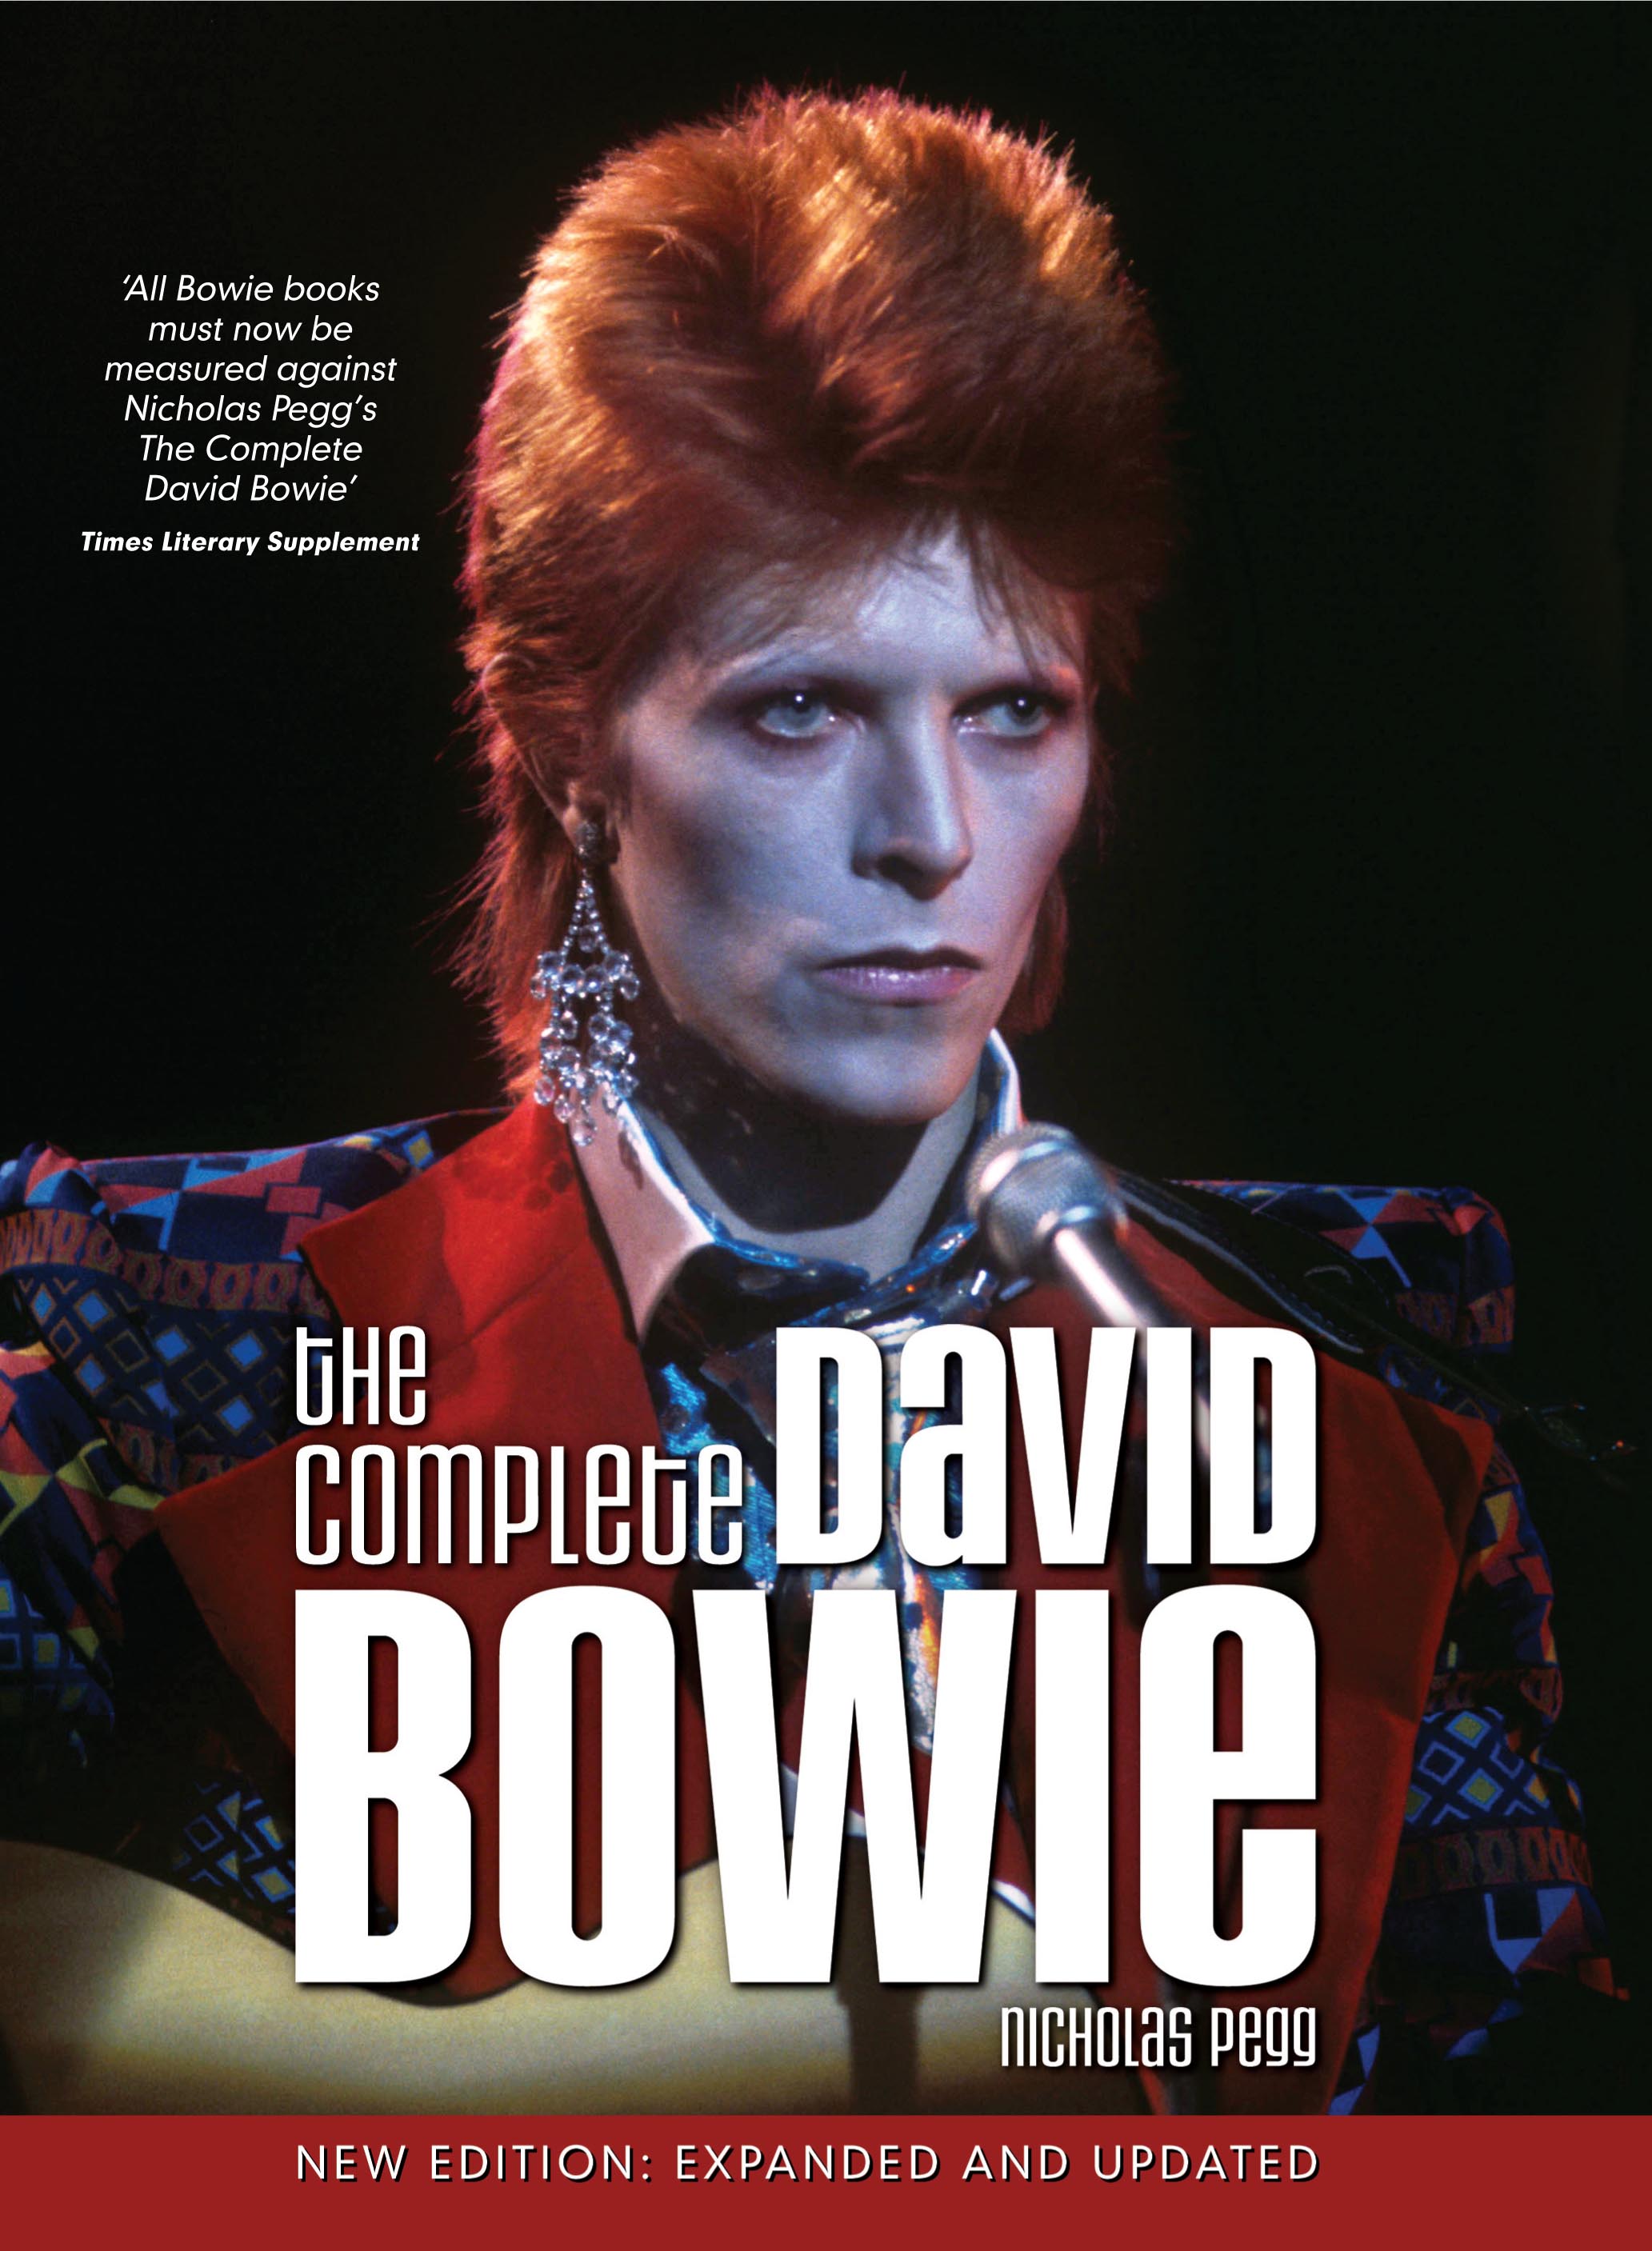 The Complete David Bowie launch event Titan Books